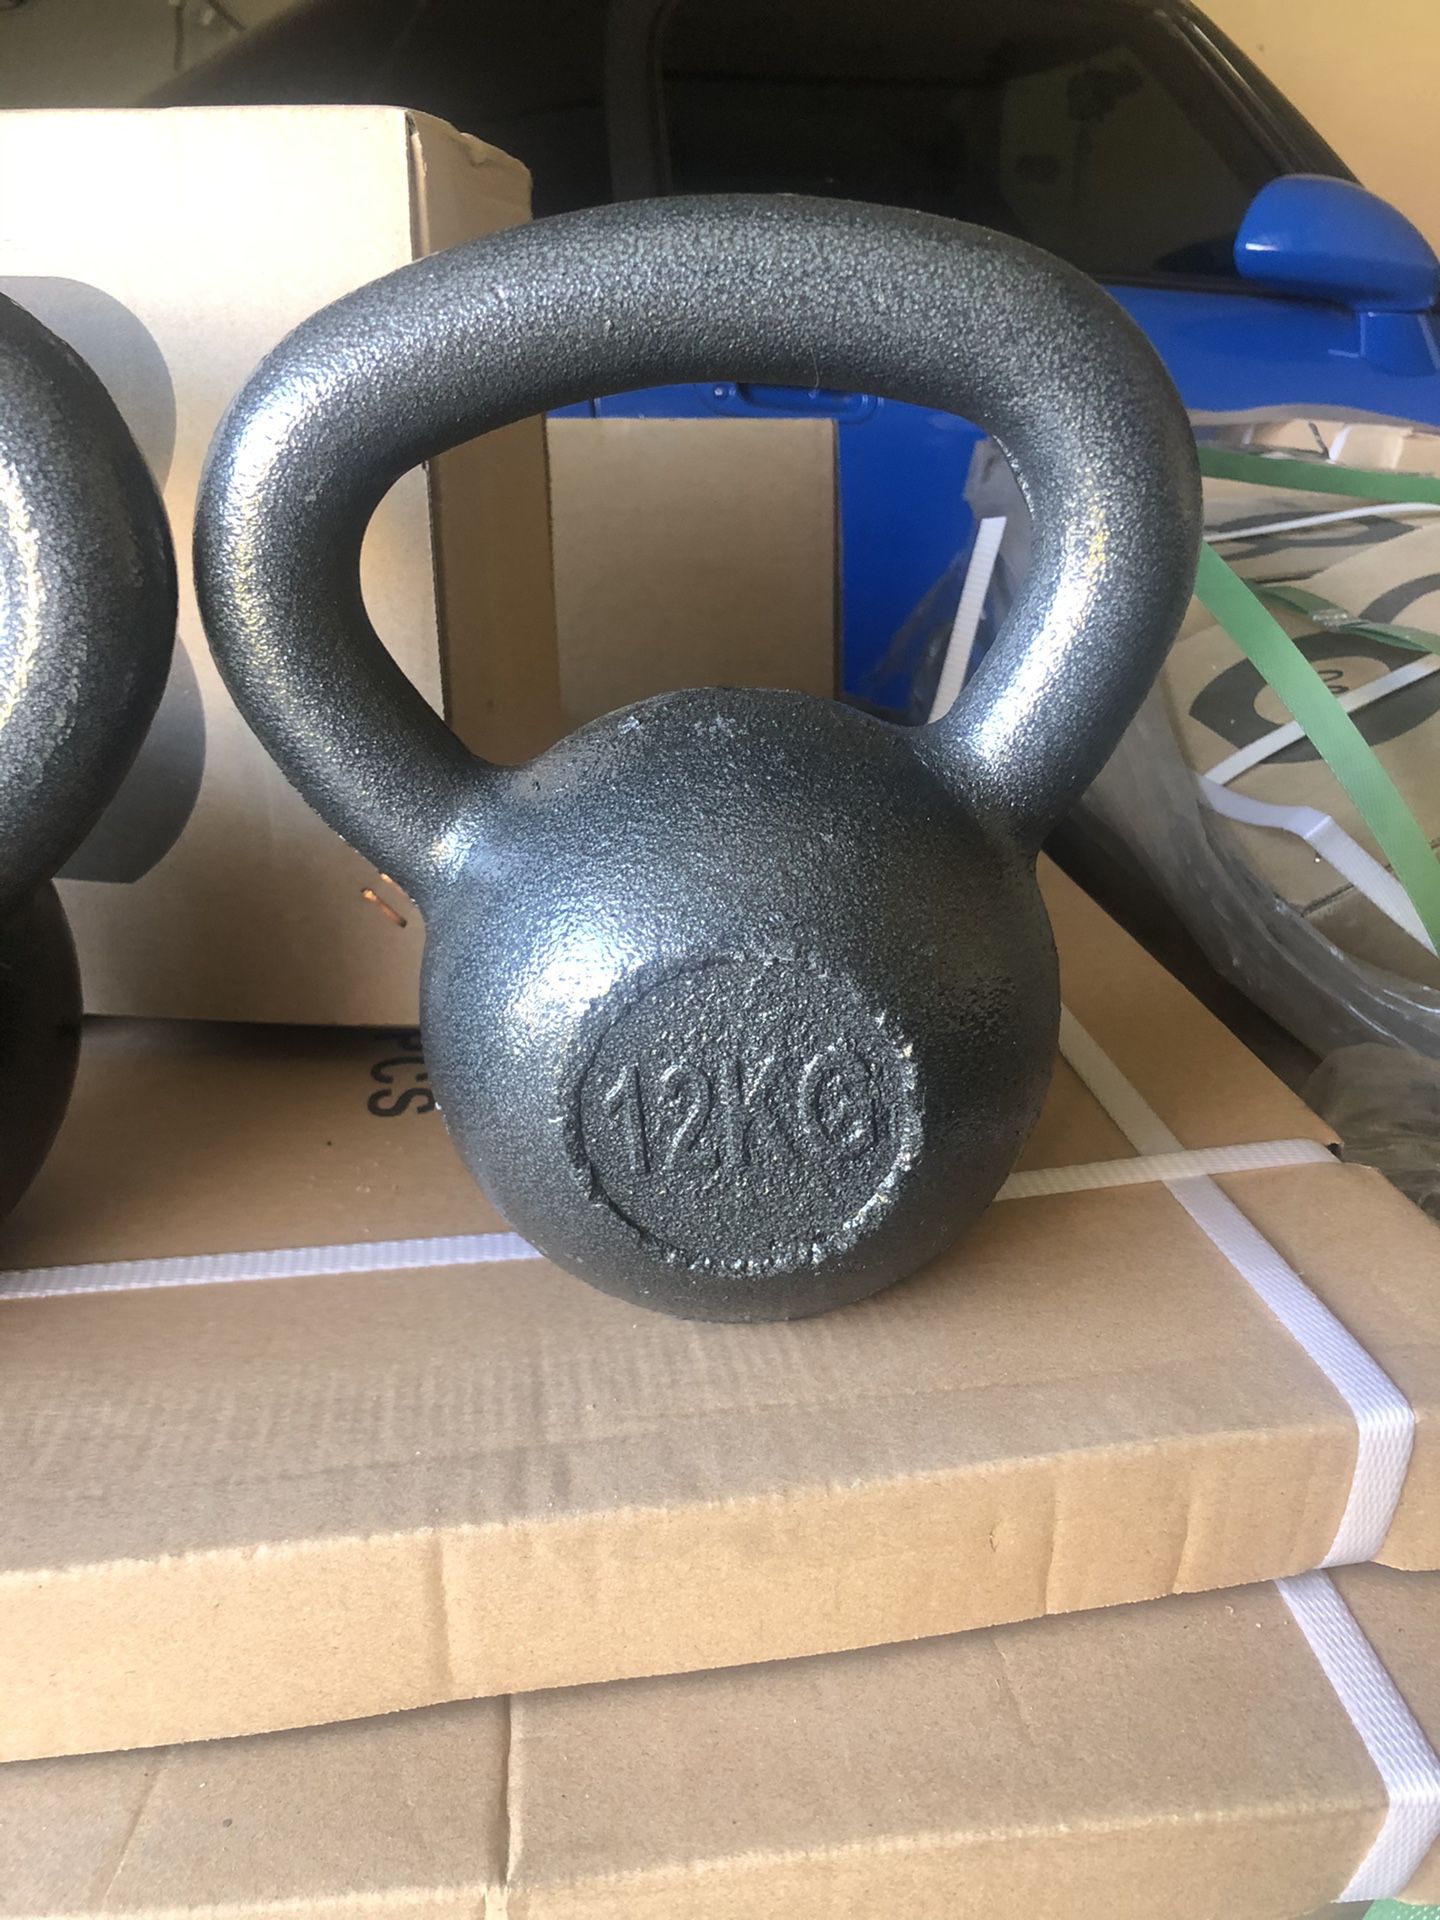 12kg ~ 25lb Cast Iron Kettlebell Steel Weight Home Gym Crossfit Kettle Bell